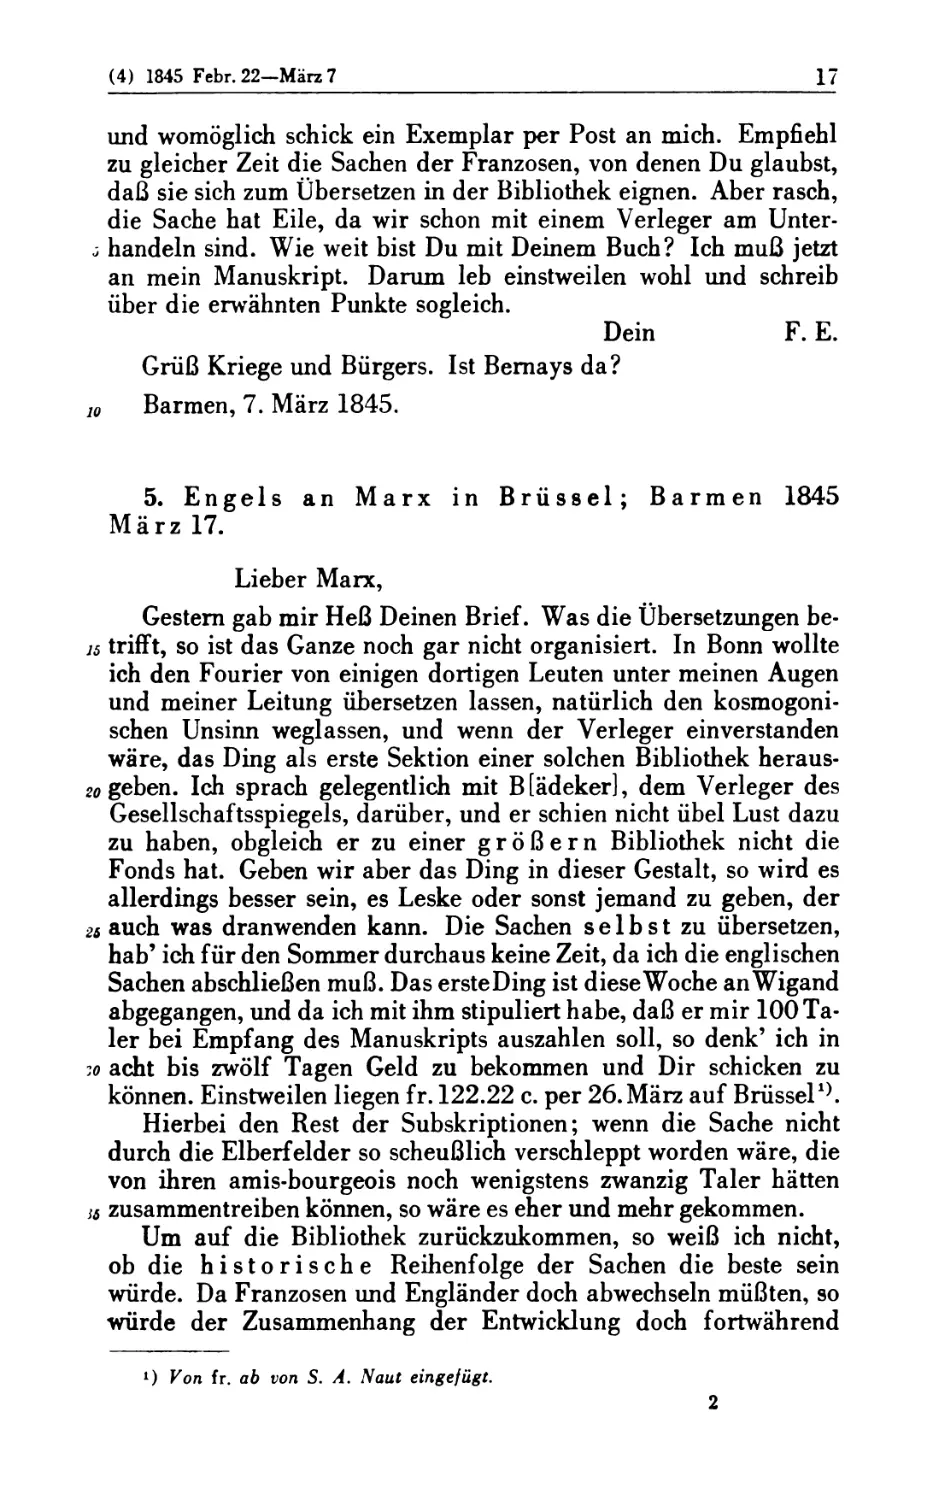 5. Engels an Marx in Brüssel; Barmen 1845 März 17